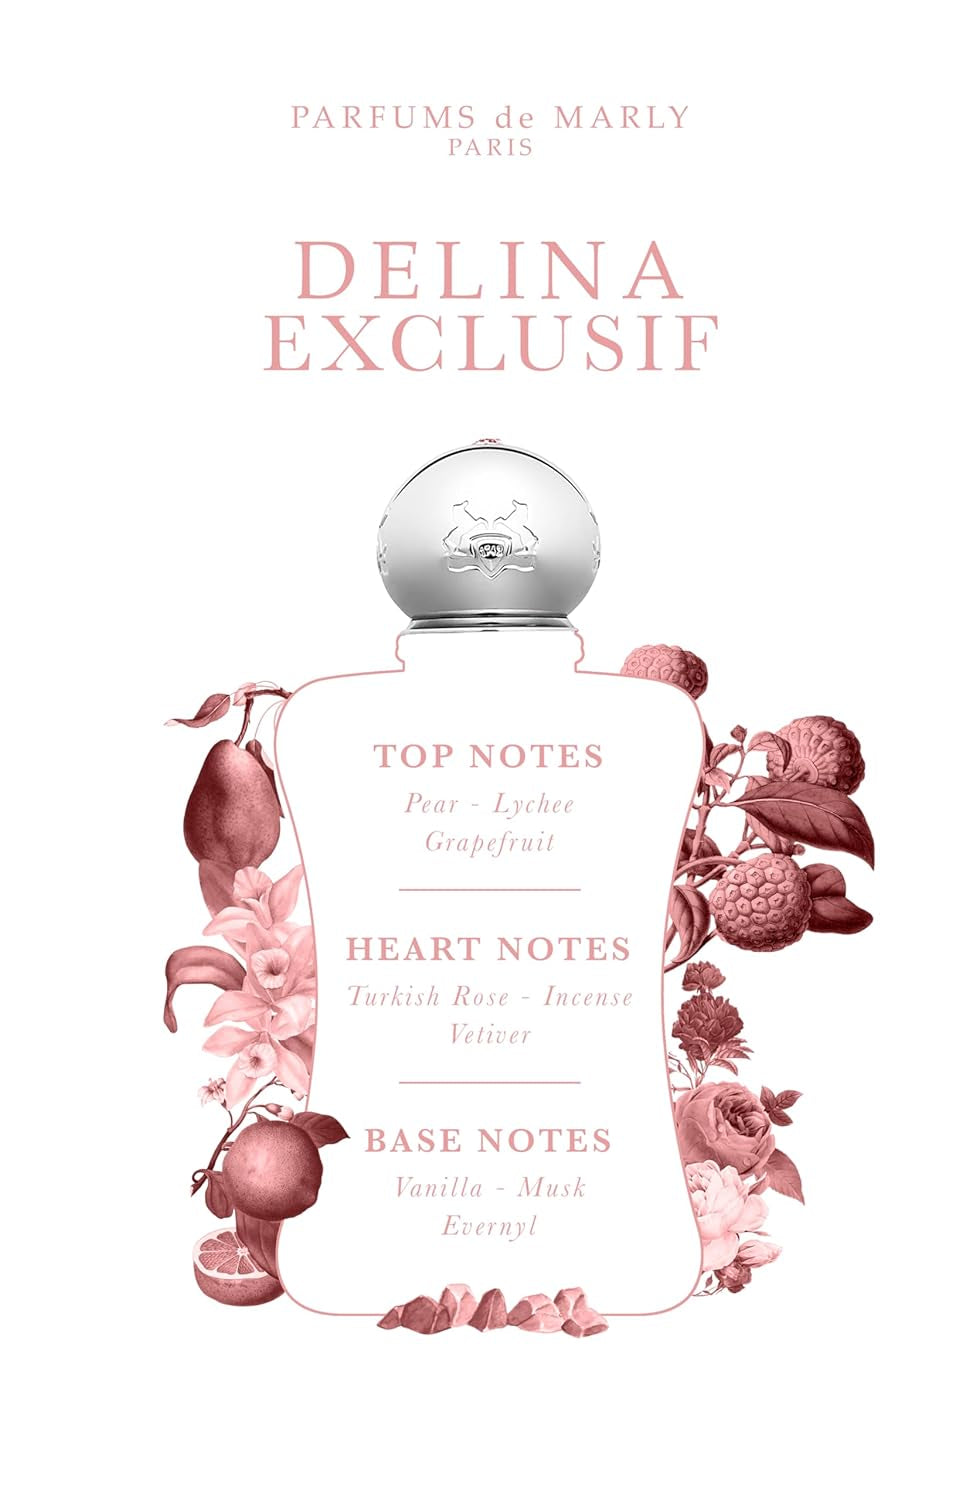 PARFUMS DE MARLY - Delina Exclusif - 1 Fl Oz - Parfum for Women - Top Notes Pear, Lychee, Grapefruit - Heart Notes Rosa Damascena, Incense, Vetiver - Base Notes Vanilla, Musk, Evernyl - 30ml